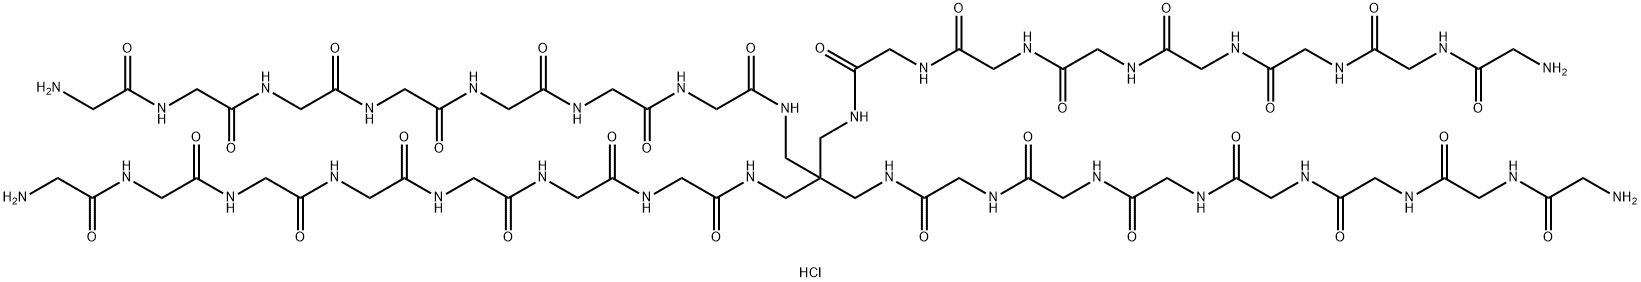 318286-59-8 Glycylglycylglycylglycylglycylglycylglycine tetraamide with 2,2-bis(aminomethyl)-1,3-propanediamine